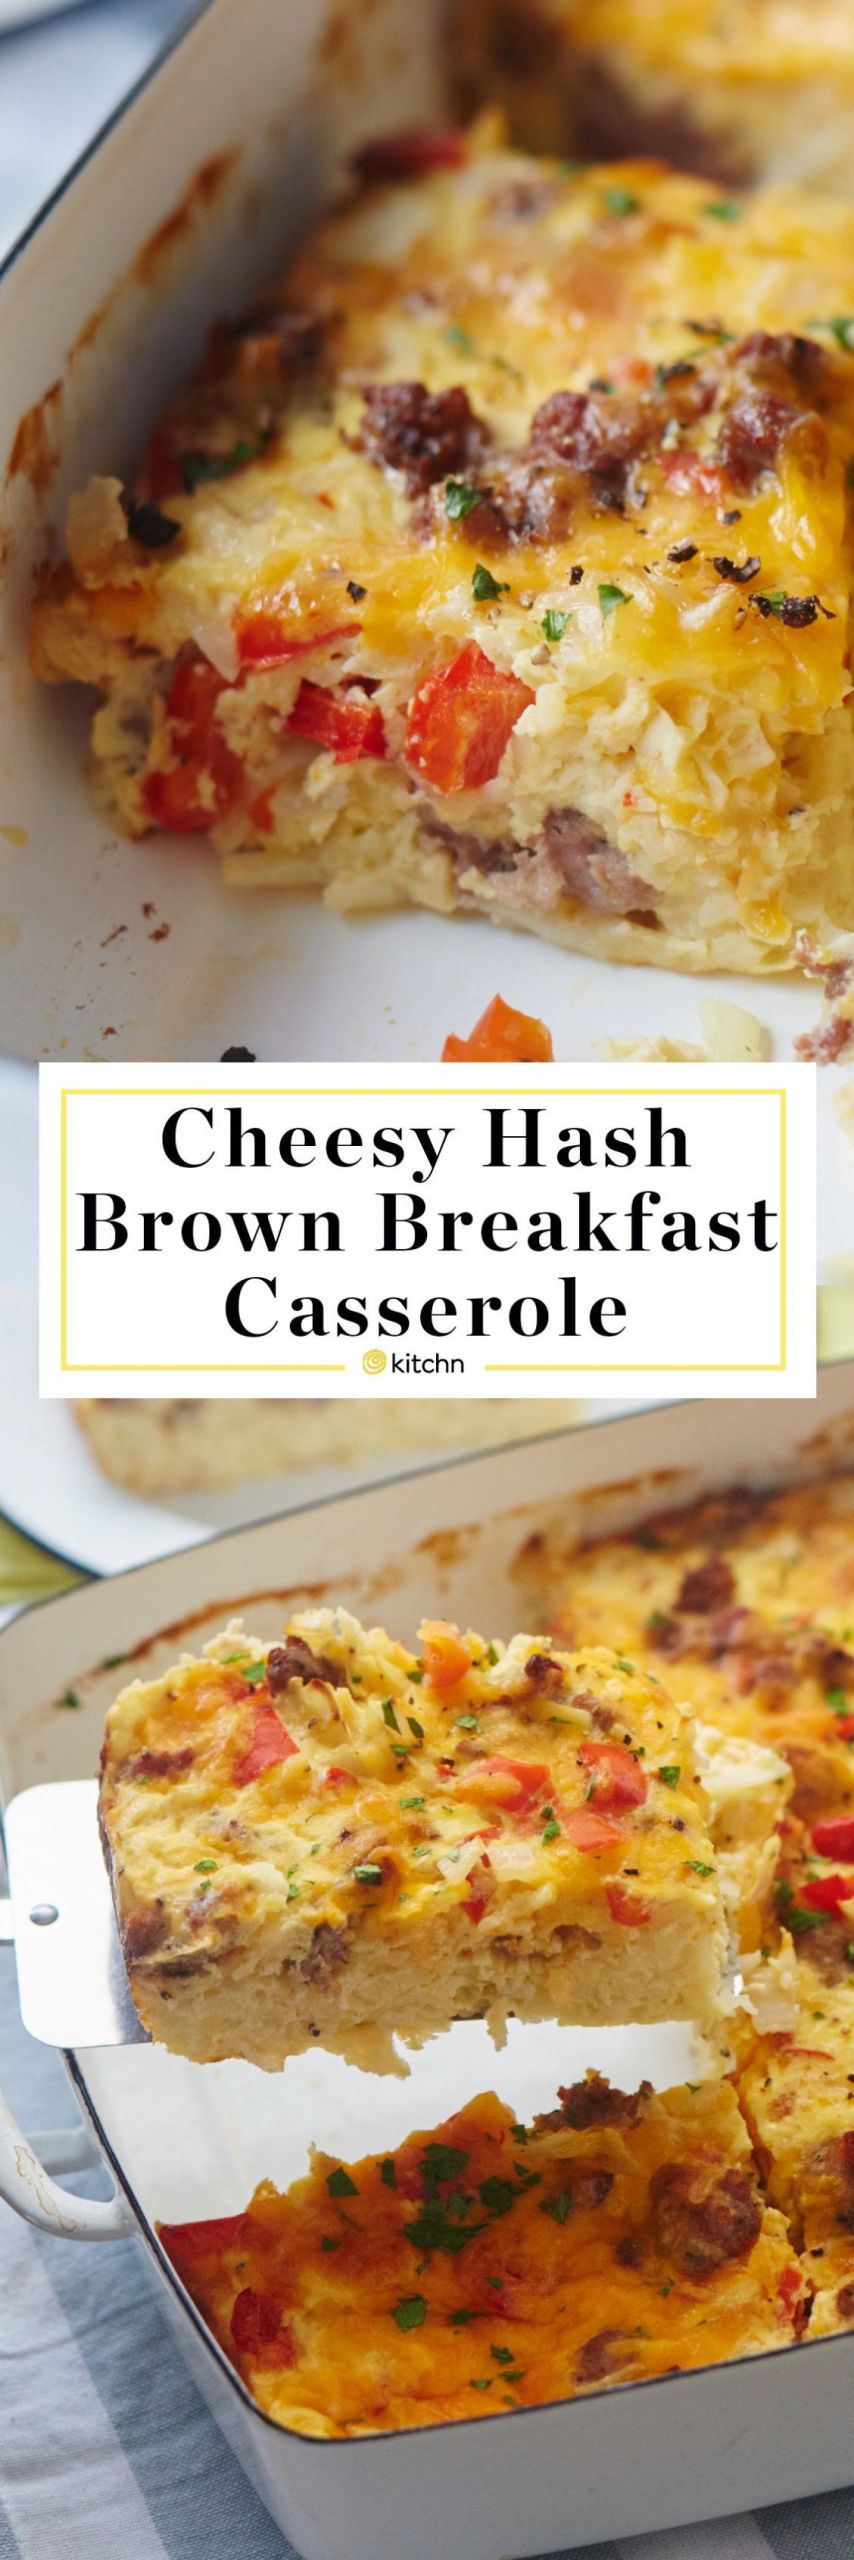 Make Ahead Breakfast Burritos With Hash Browns
 Cheesy Hash Brown Breakfast Casserole Recipe